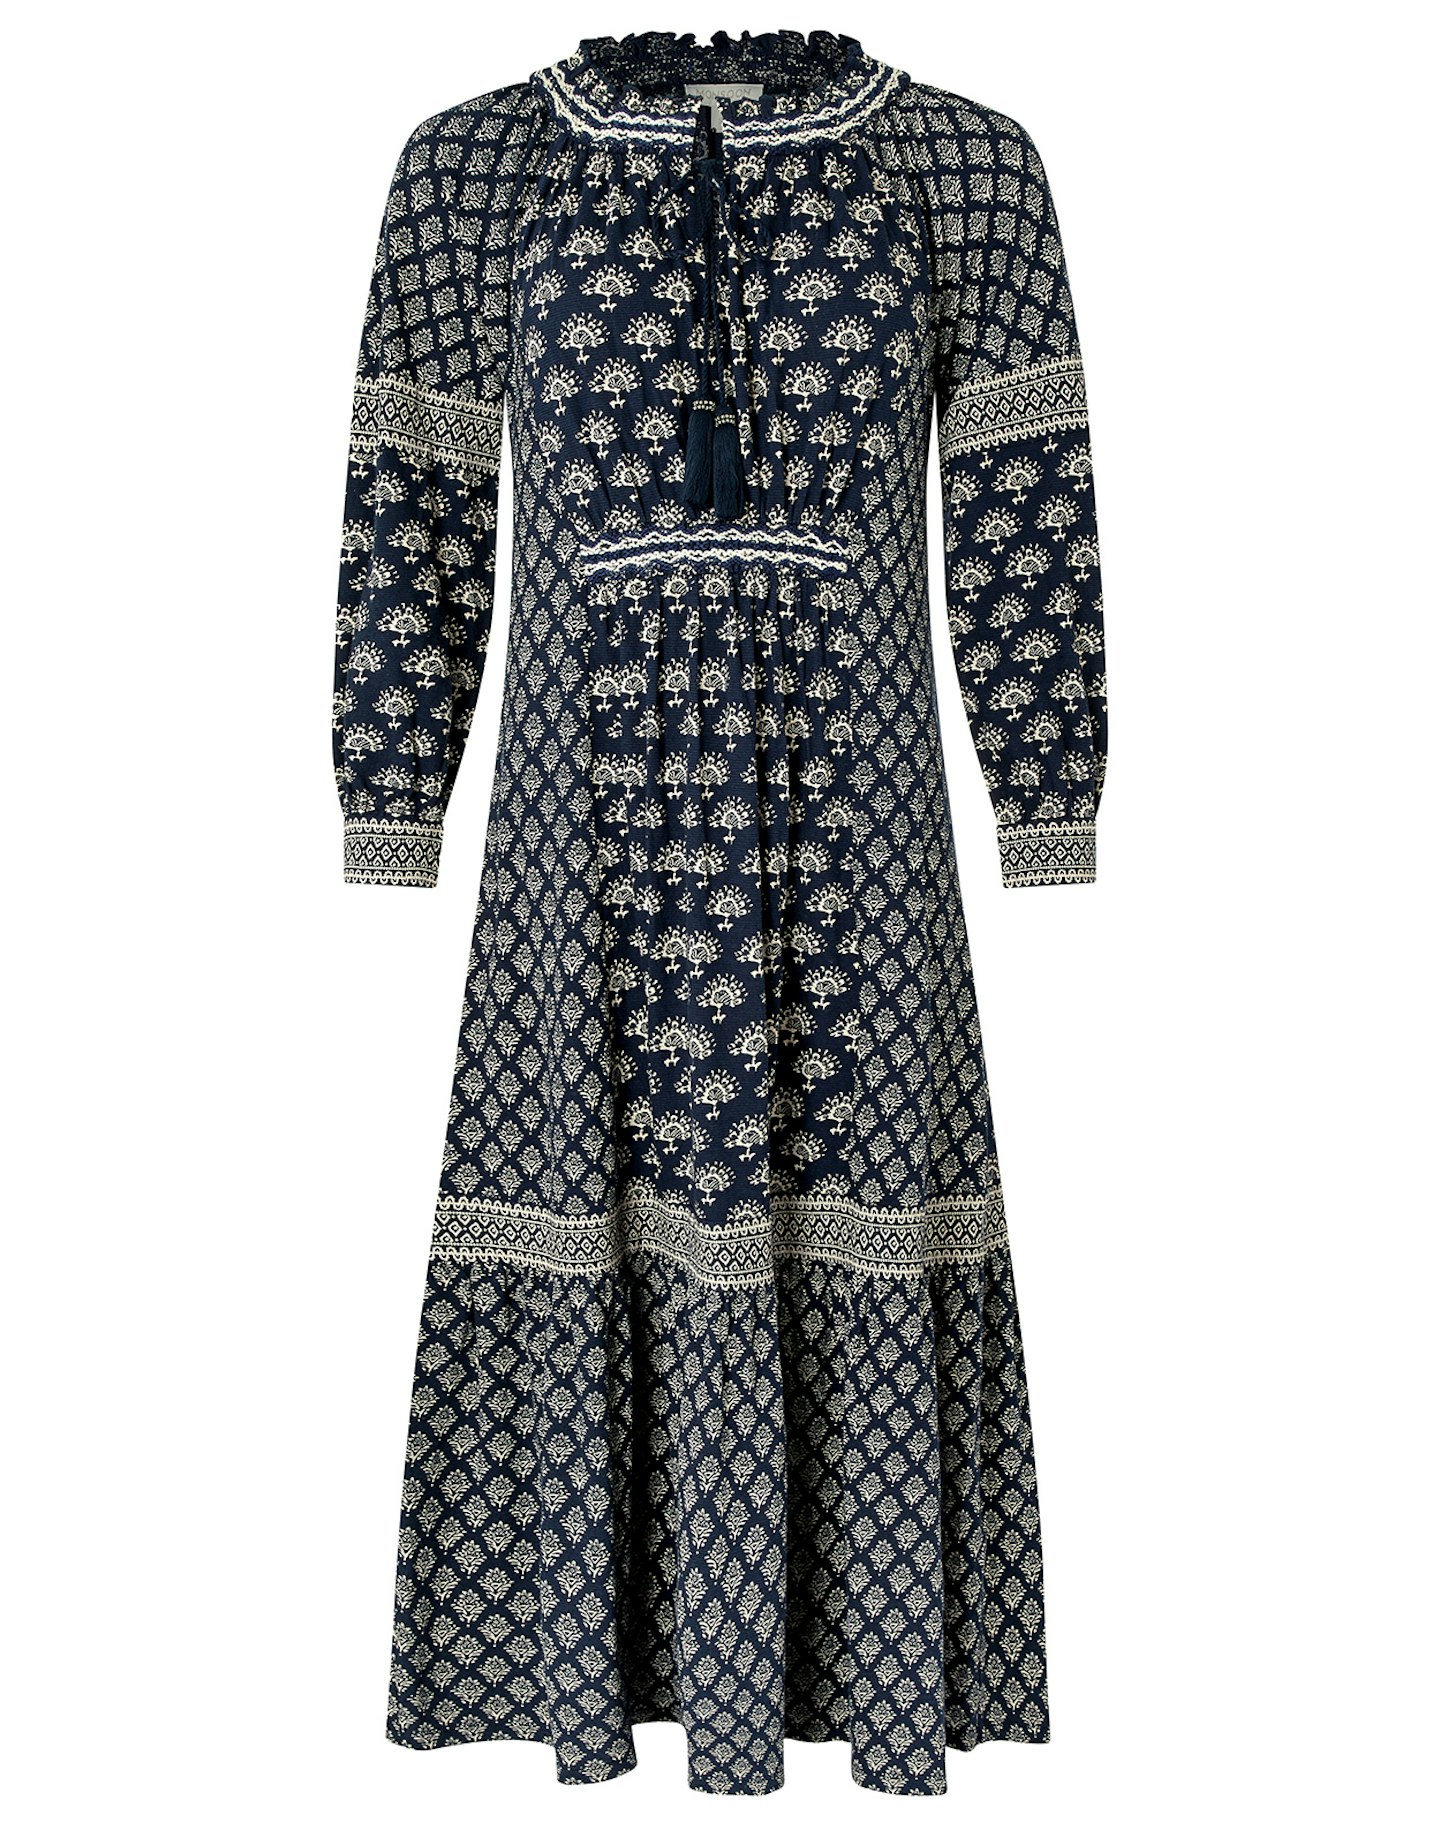 Monsoon, Heshna Printed Midi Dress, £60